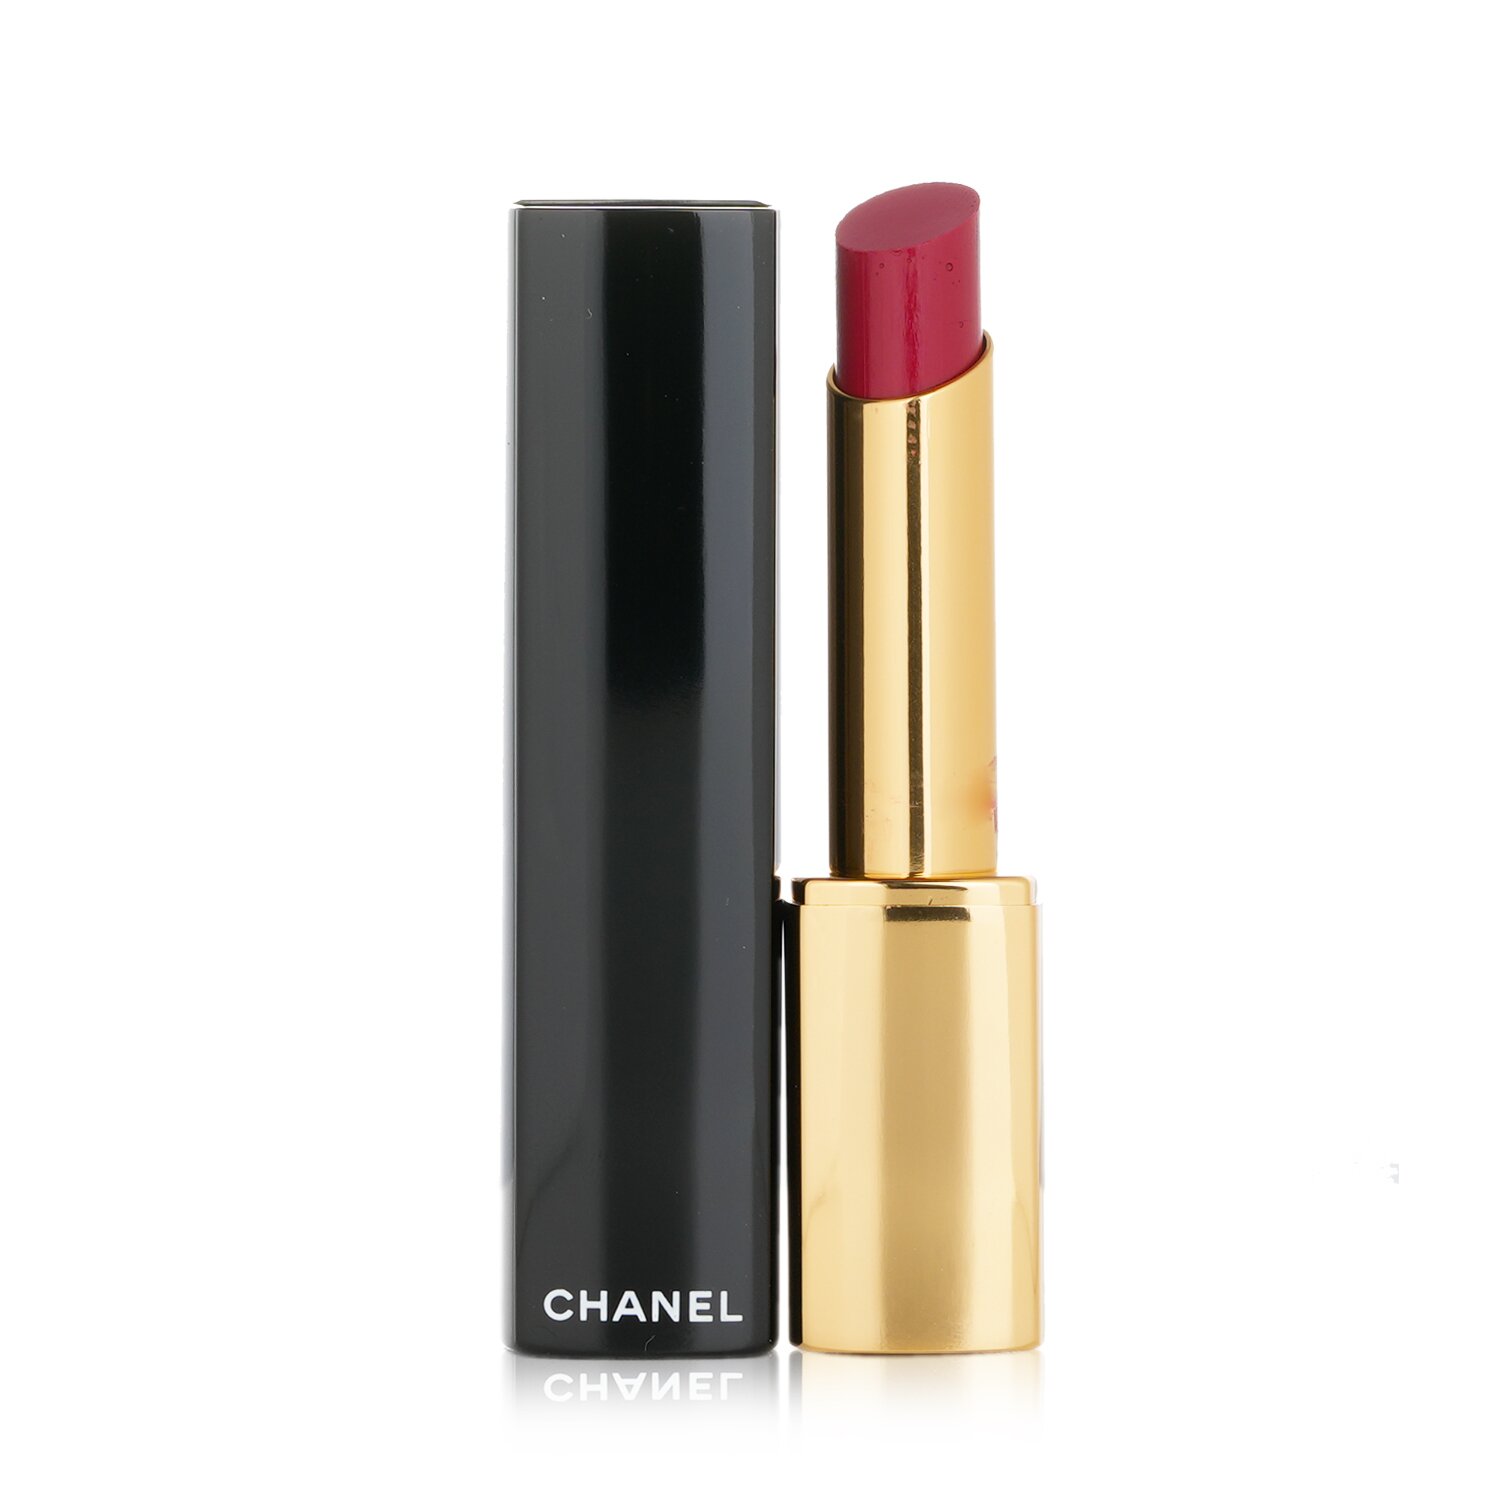 Chanel Rouge Allure Ink Fusion reinvents matte liquid lipsticks